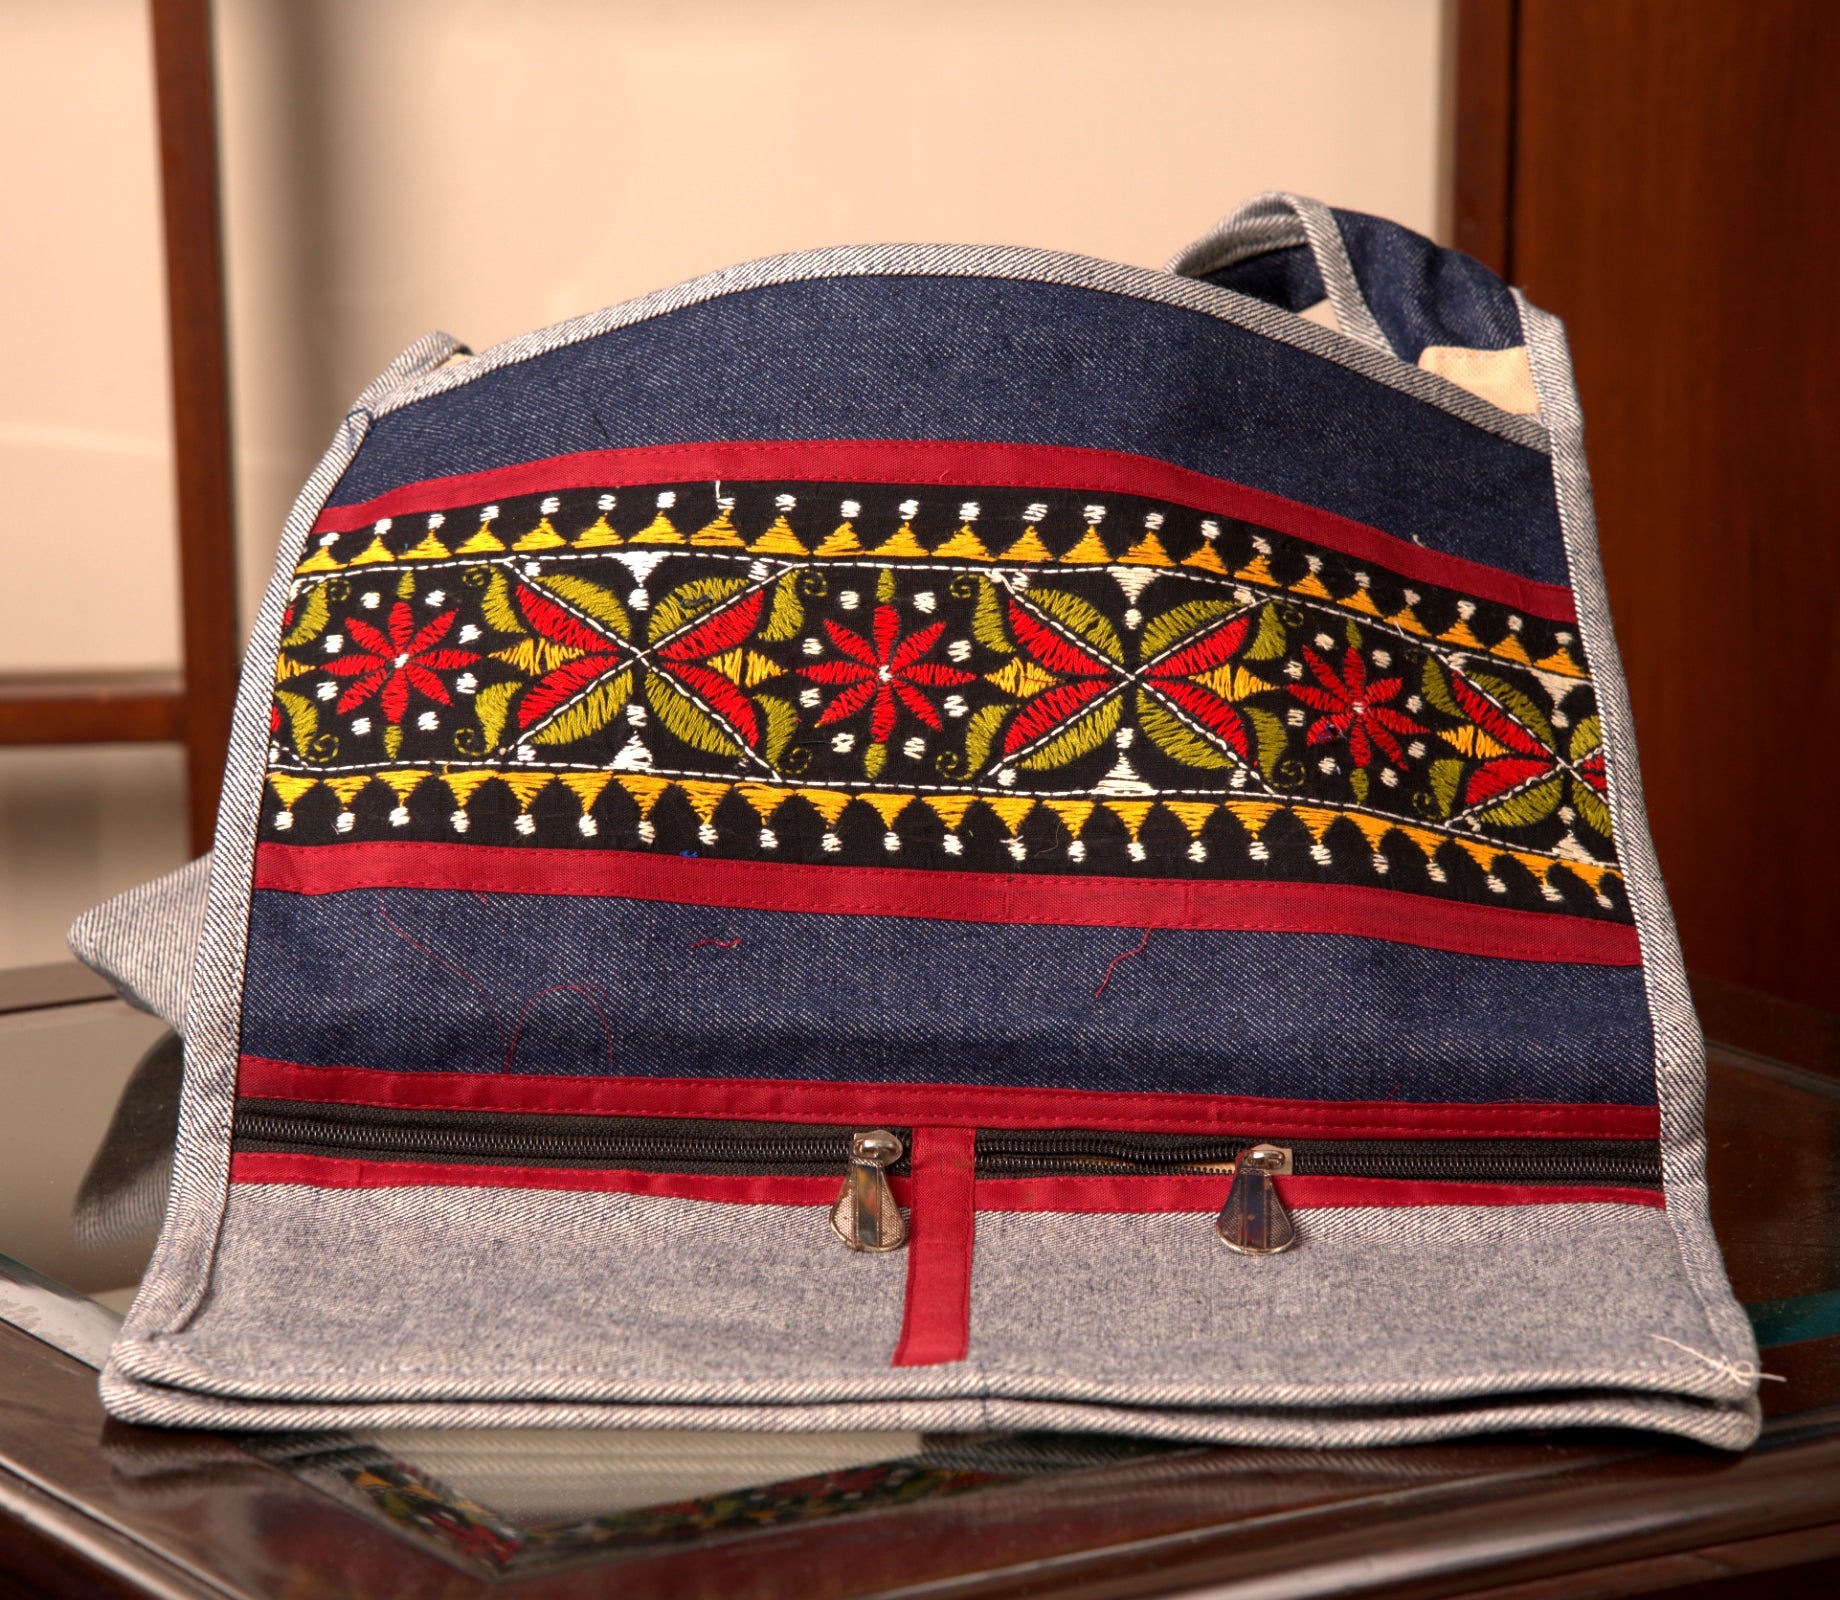 Buy Poonam Arts Cotton Jacquard Fabric Design Vintage Look Handcrafted  Handbags at Amazon.in